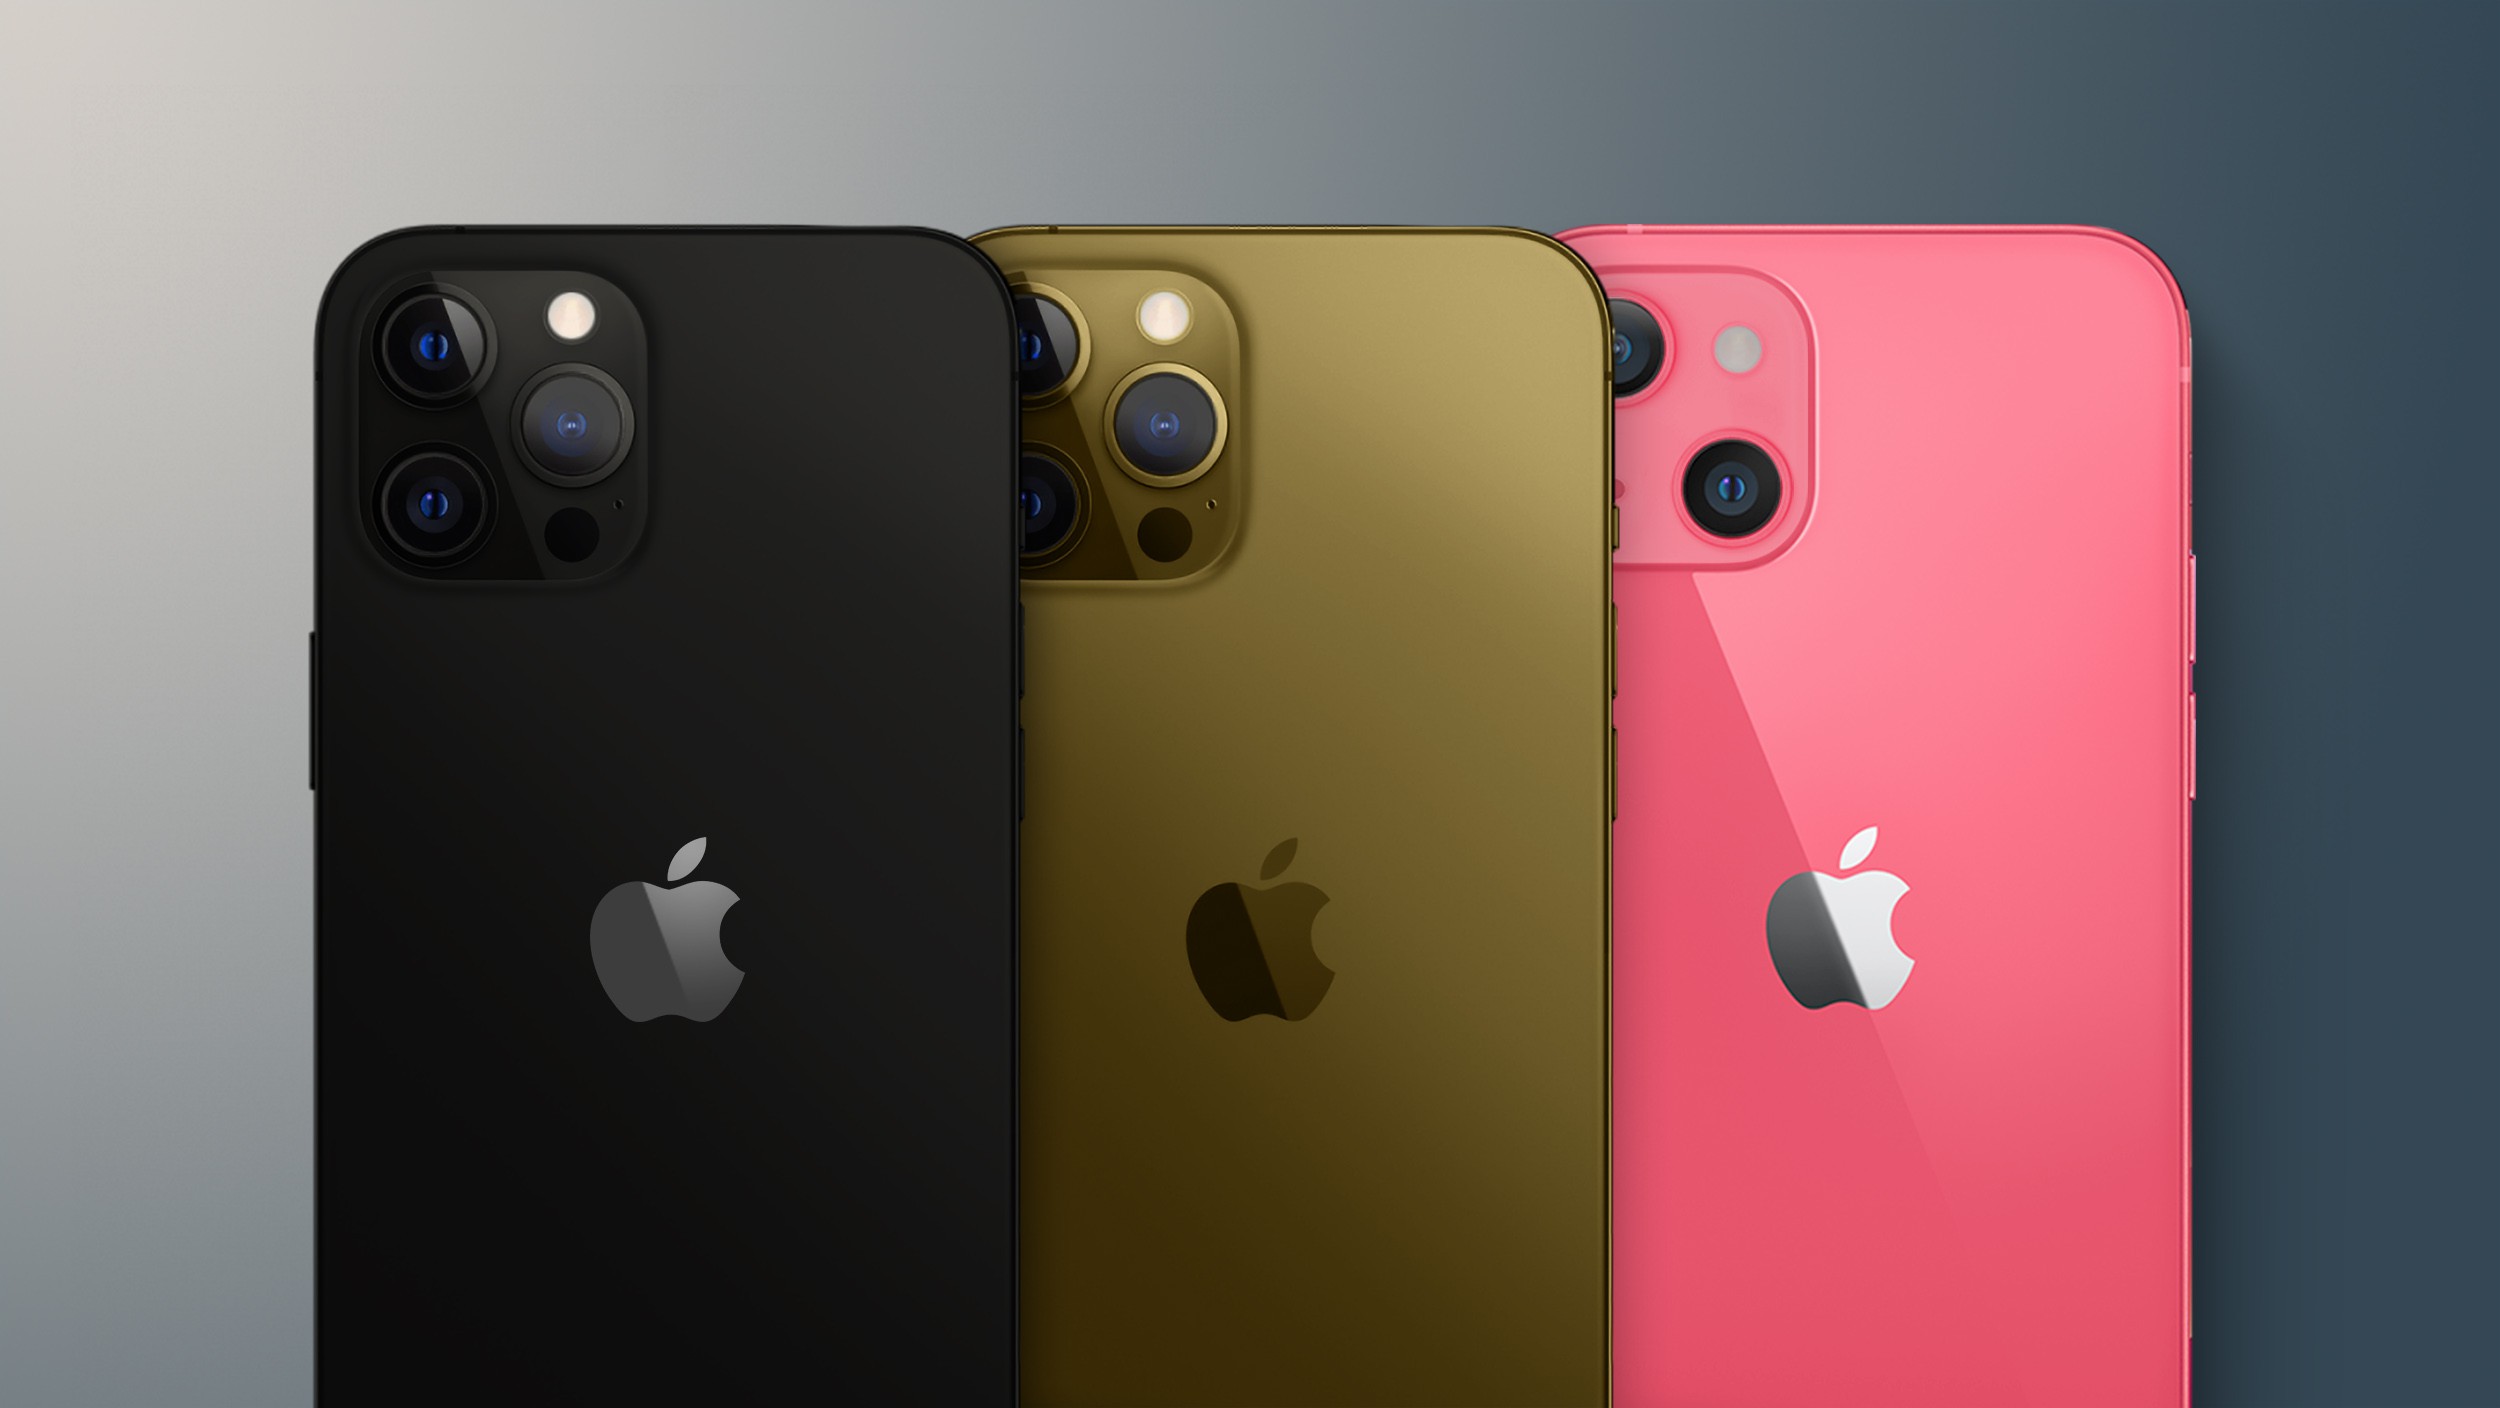 iphone 13 pro colors rumors